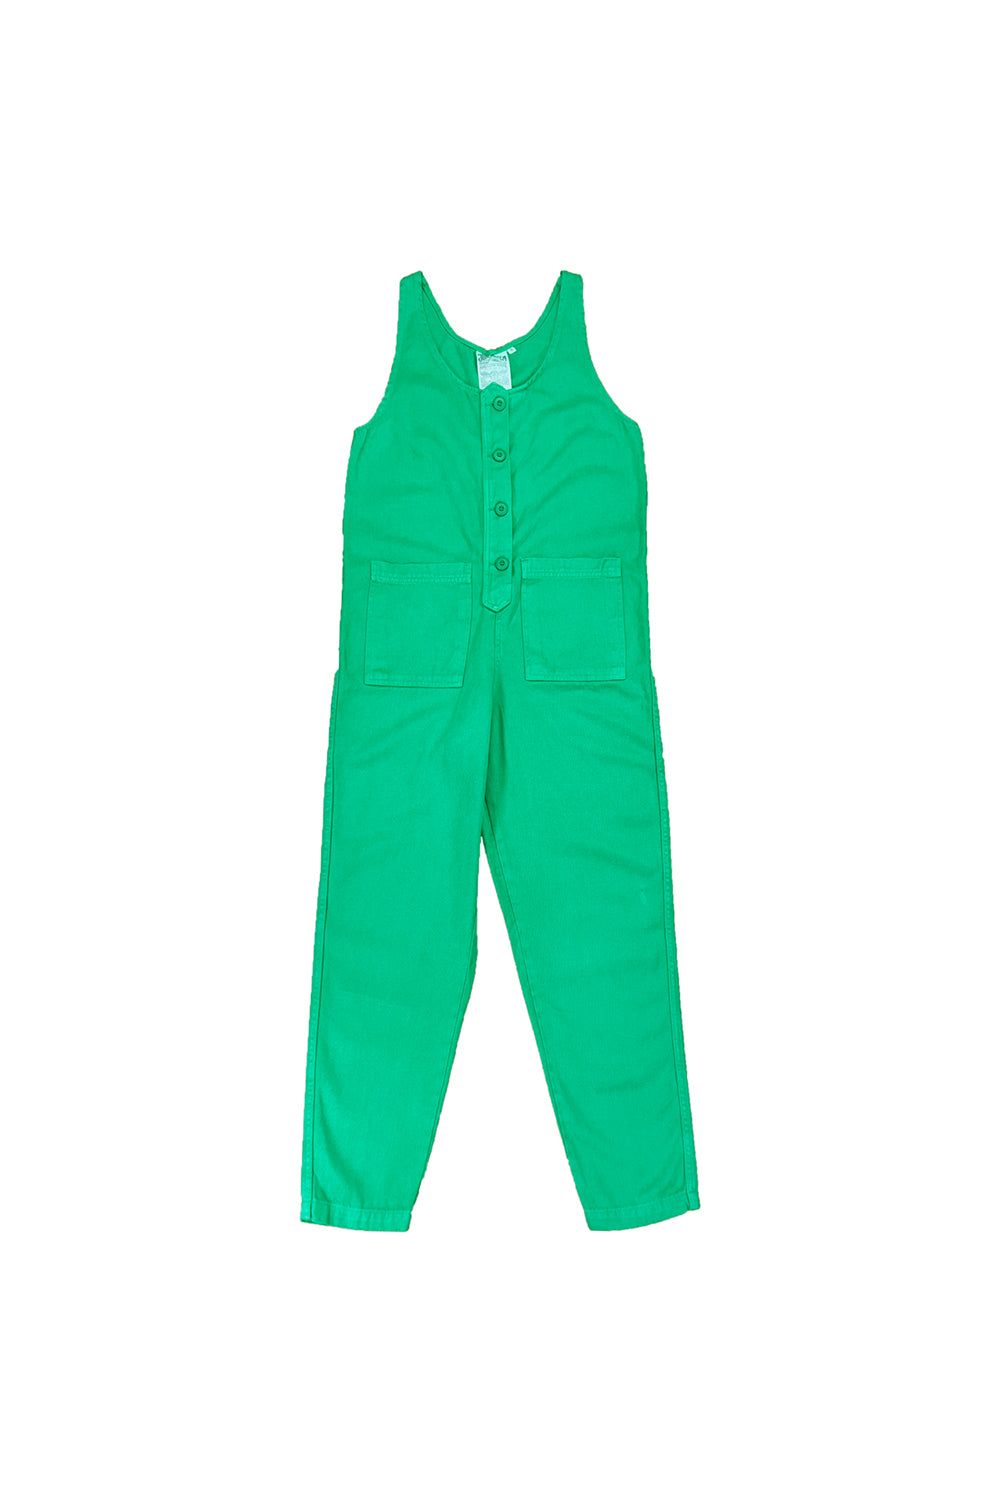 Button Front Jumper - Sale Colors | Jungmaven Hemp Clothing & Accessories / Color: Jade Green